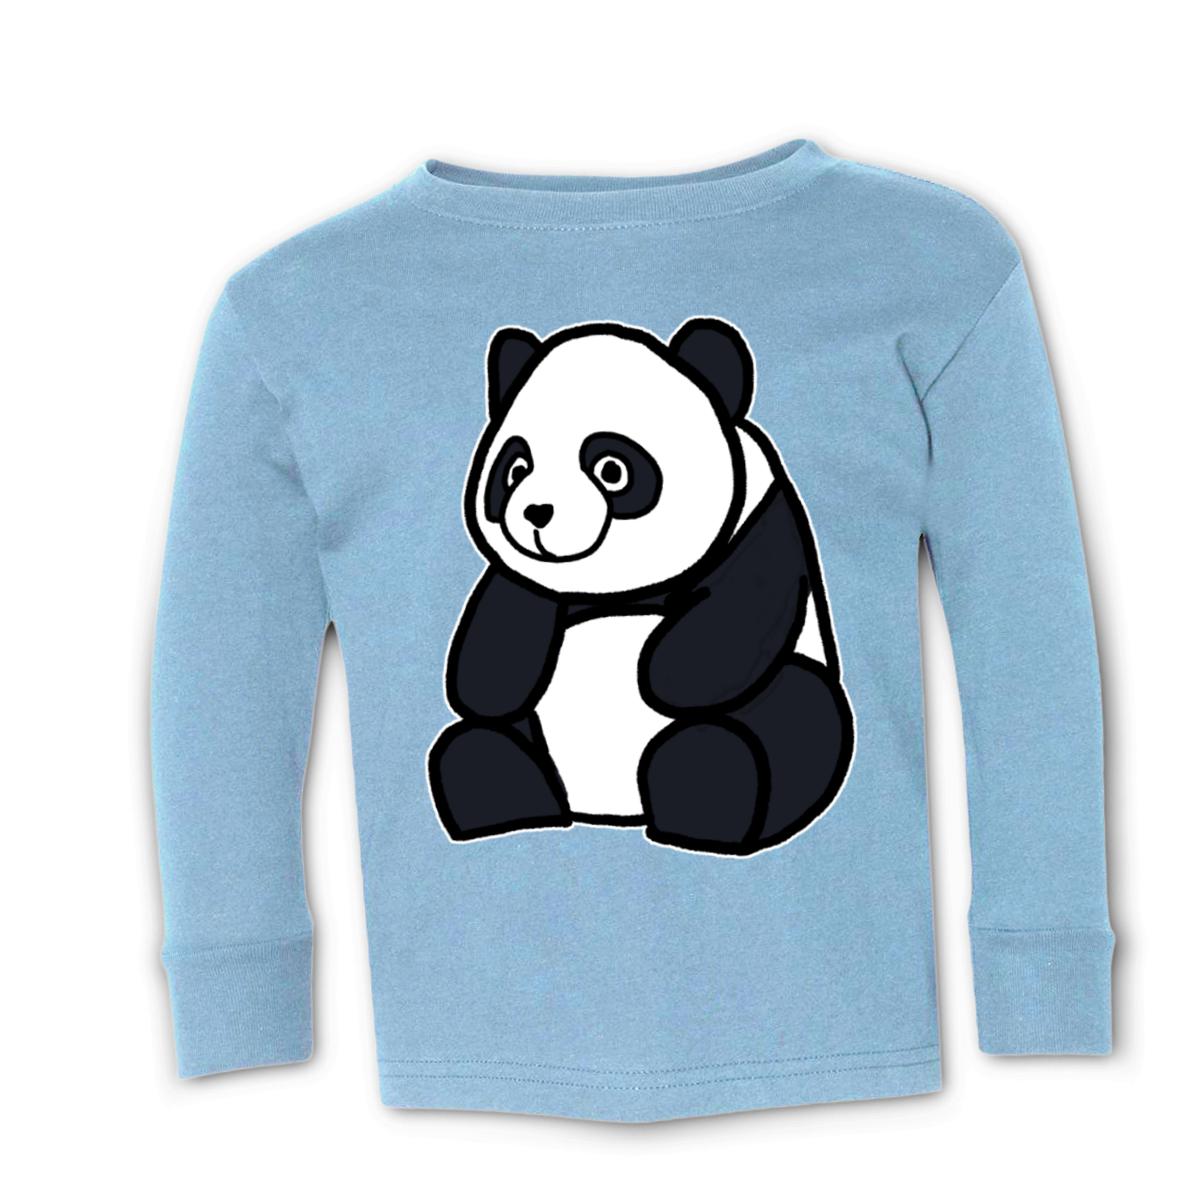 Panda Kid's Long Sleeve Tee Small light-blue